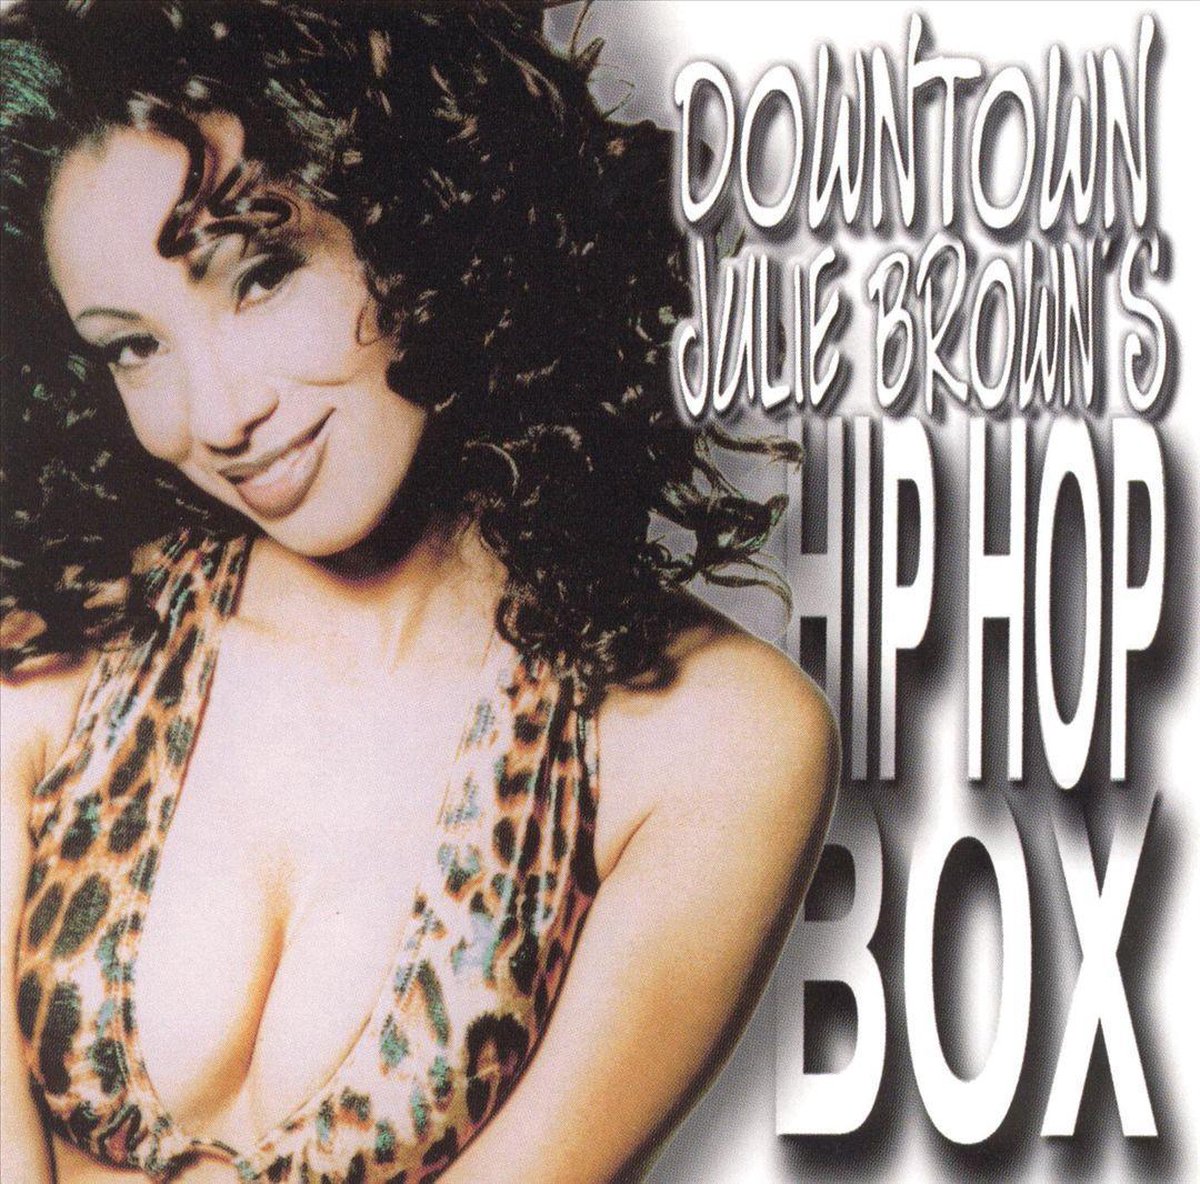 Downtown Julie Brown's Hip Hop Box - various artists